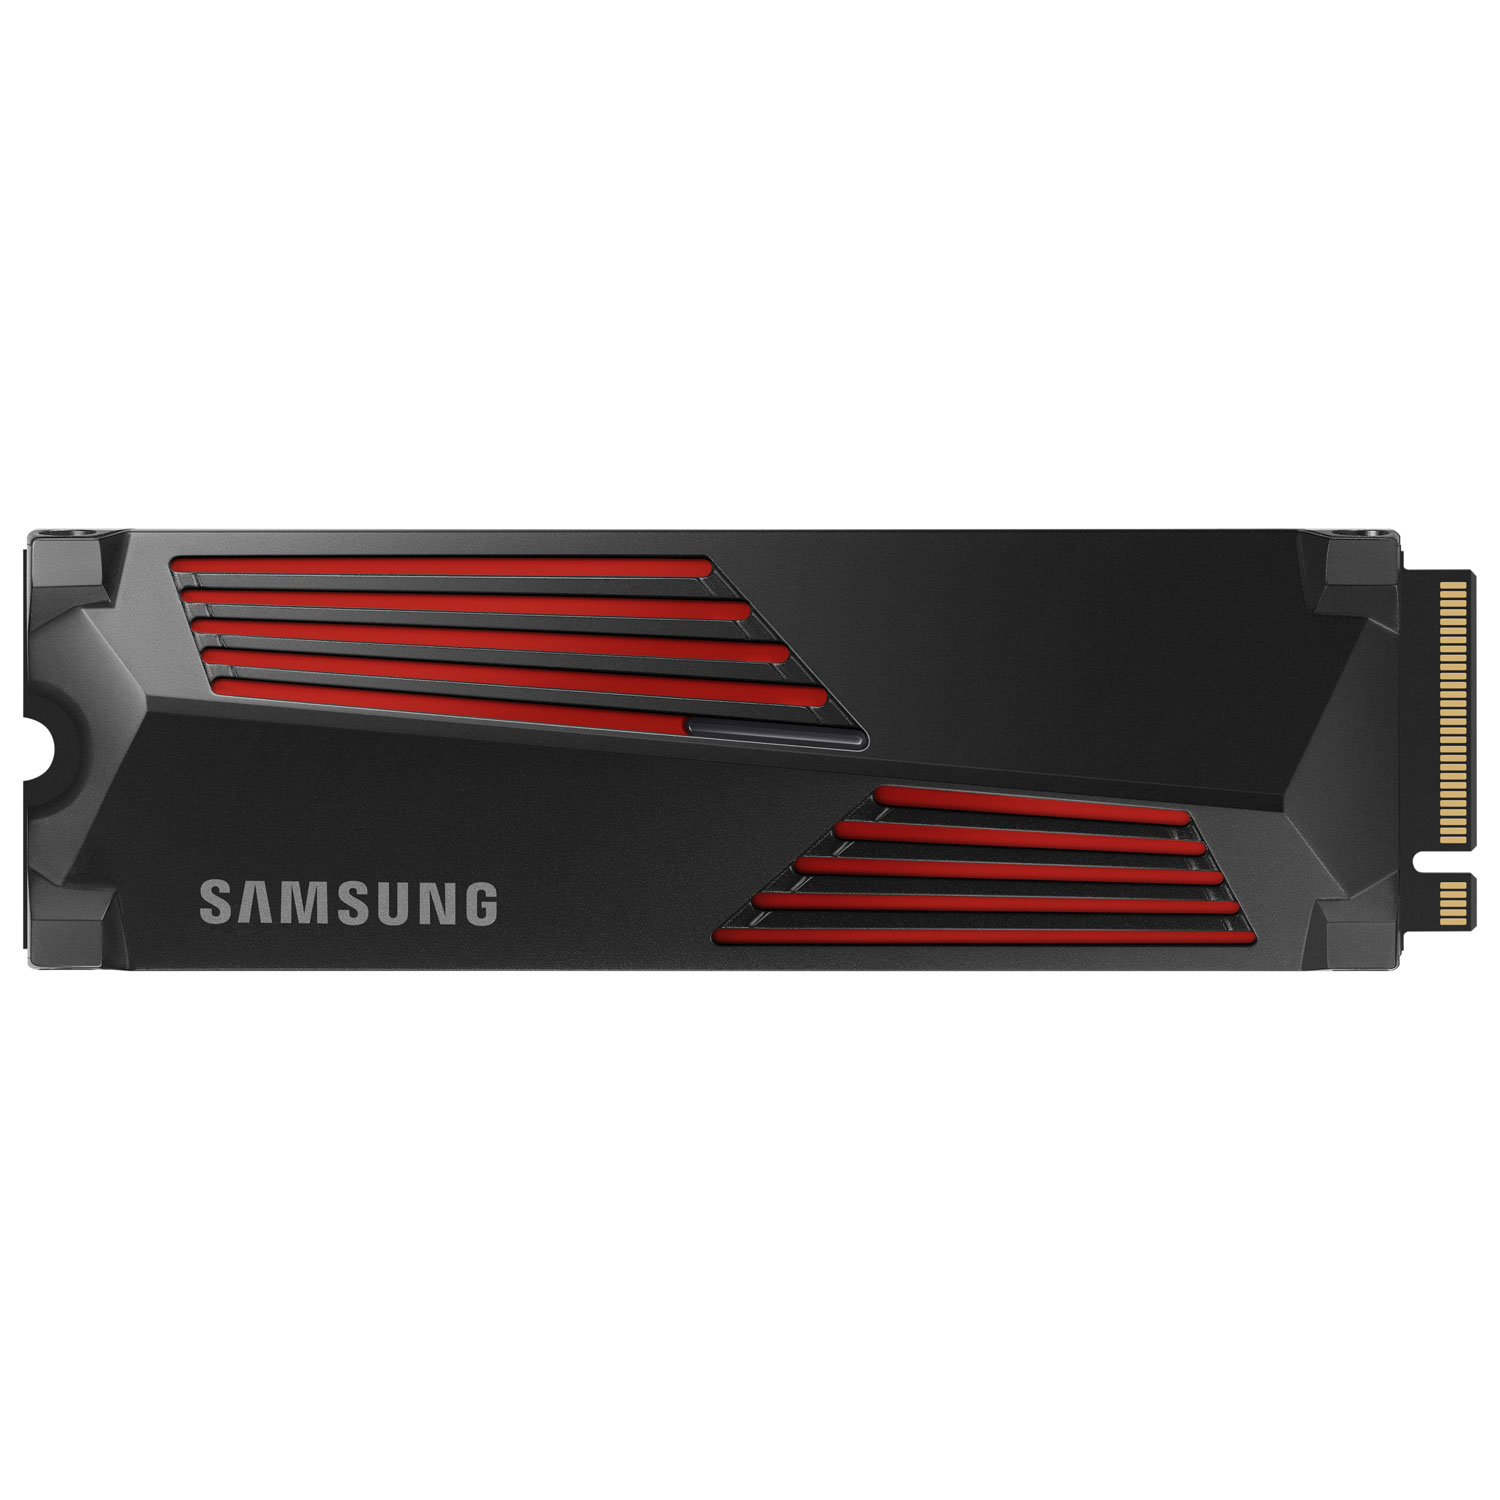 Samsung 990PRO 2TB NVMe PCI-e Internal Solid State Drive with Heatsink (MZ-V9P2T0C) - Black/Red